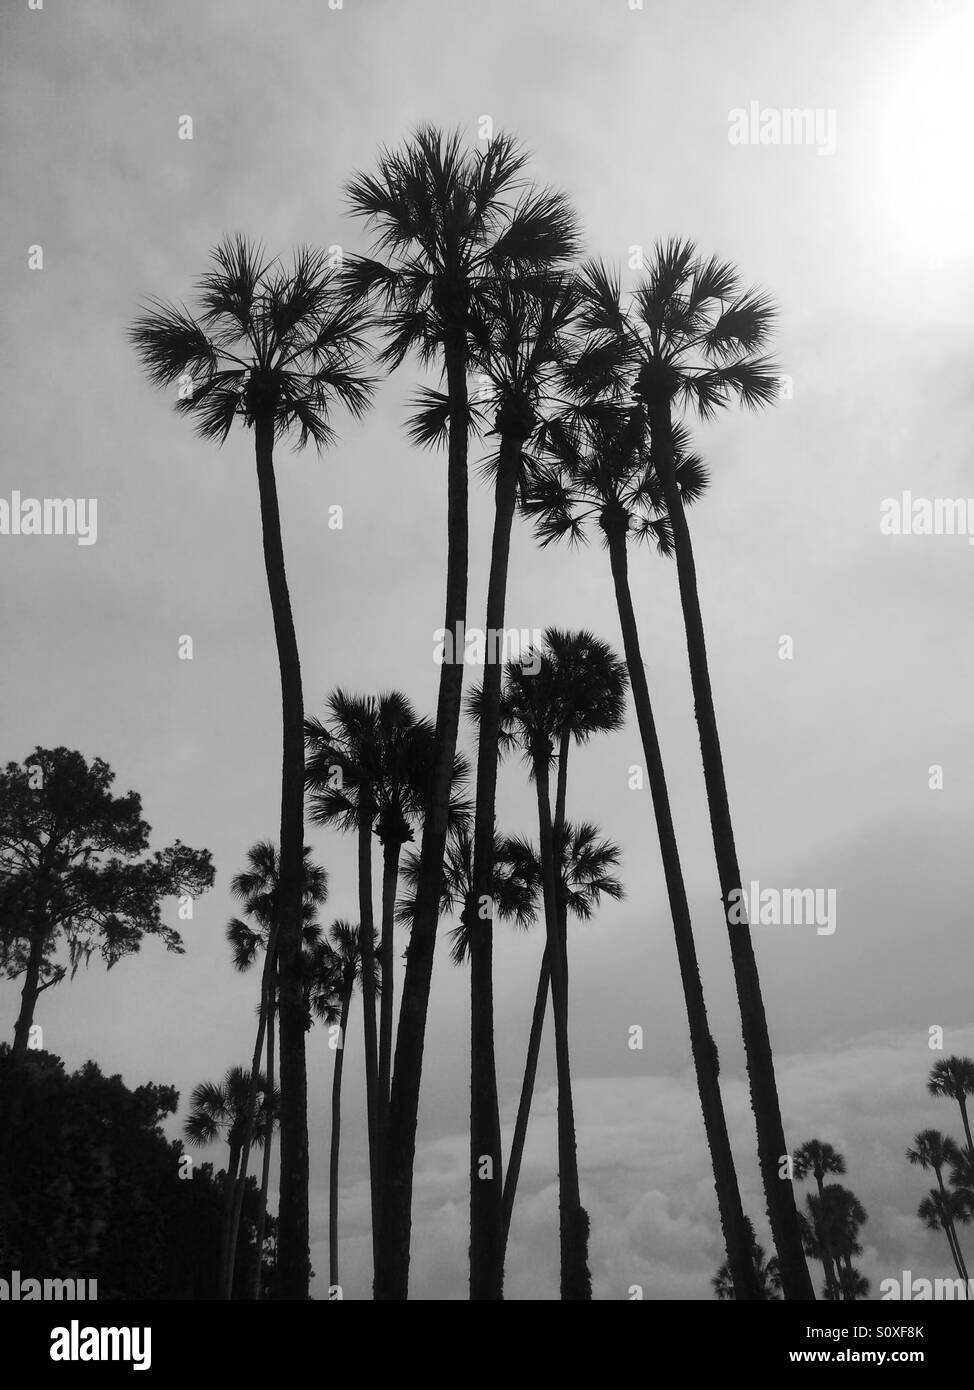 Sabal Palmetto oder Kohl Palmen am Ponte Vedra Beach, Florida, USA. Die Kohlpalme ist Staatsbaum Floridas. Stockfoto